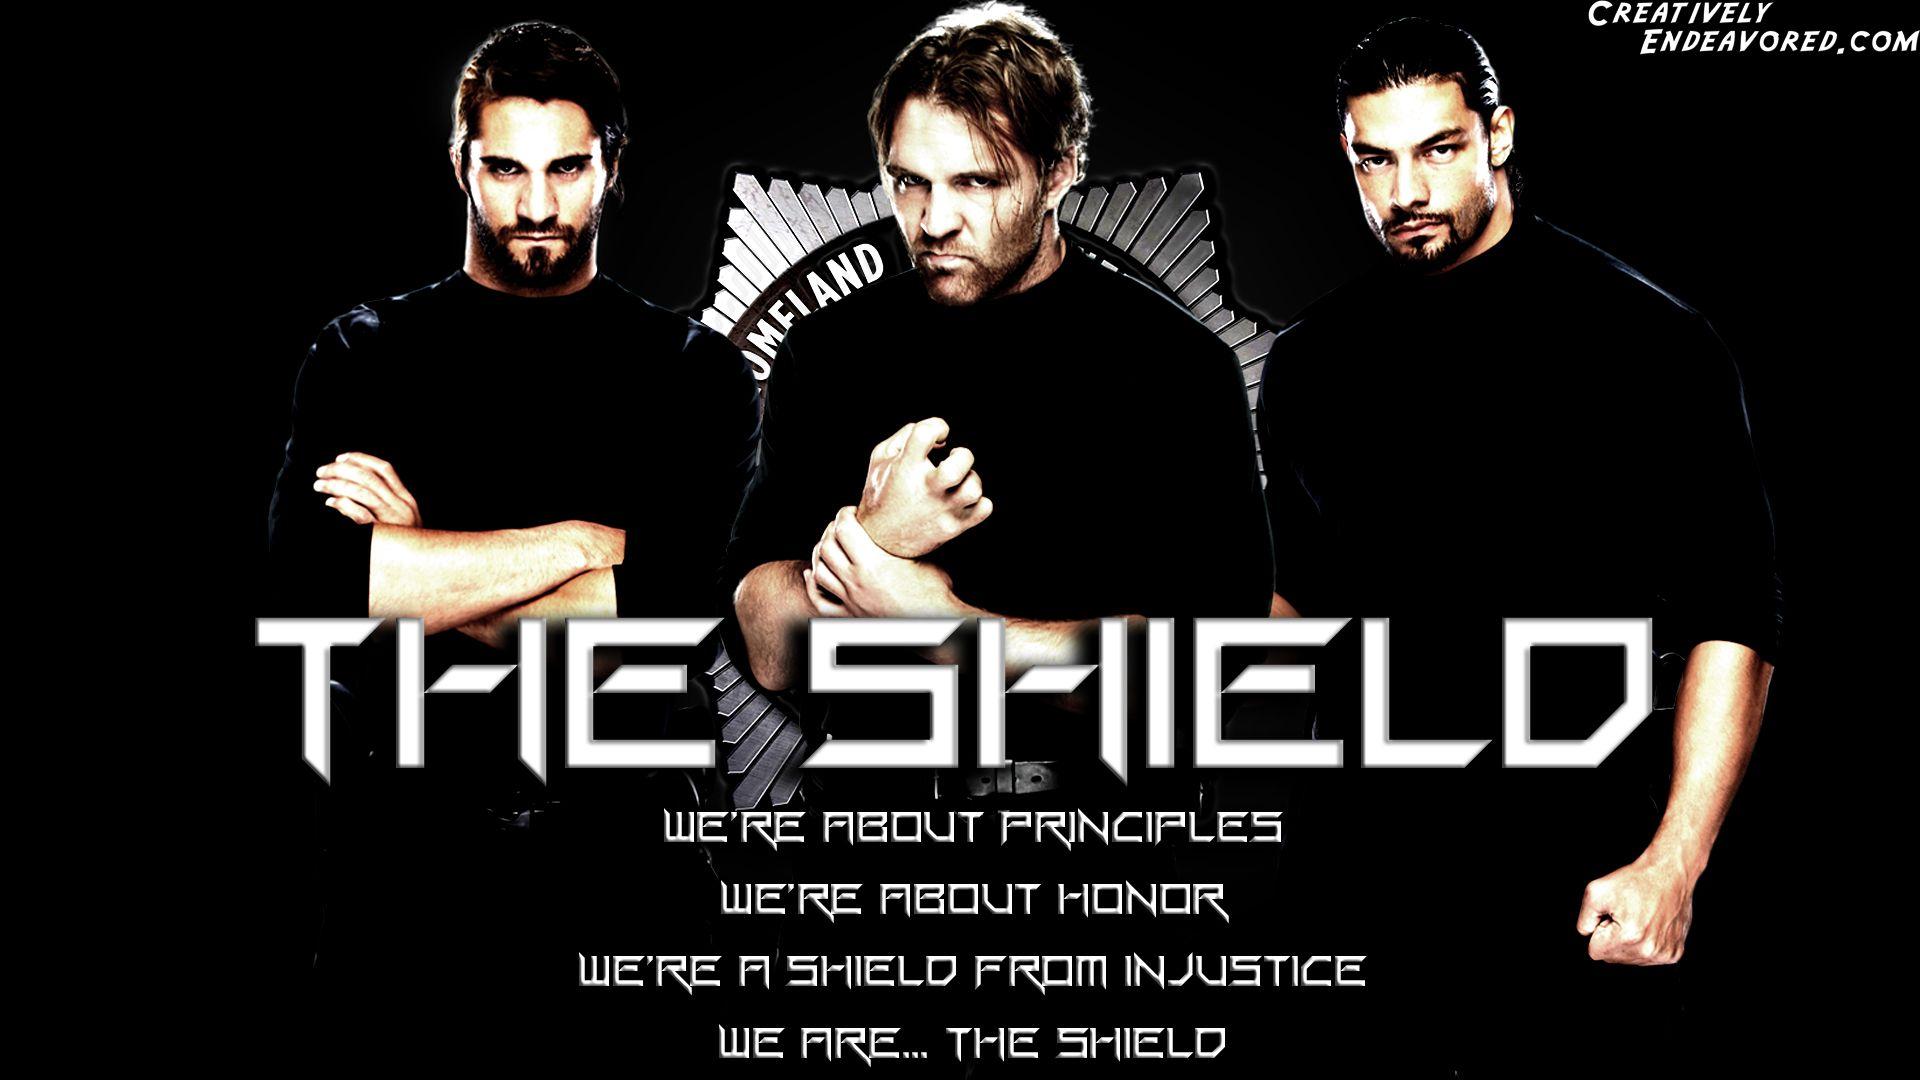 Wallpaper Wednesday: The Shield Wallpaper v2 Dean Ambrose, Seth